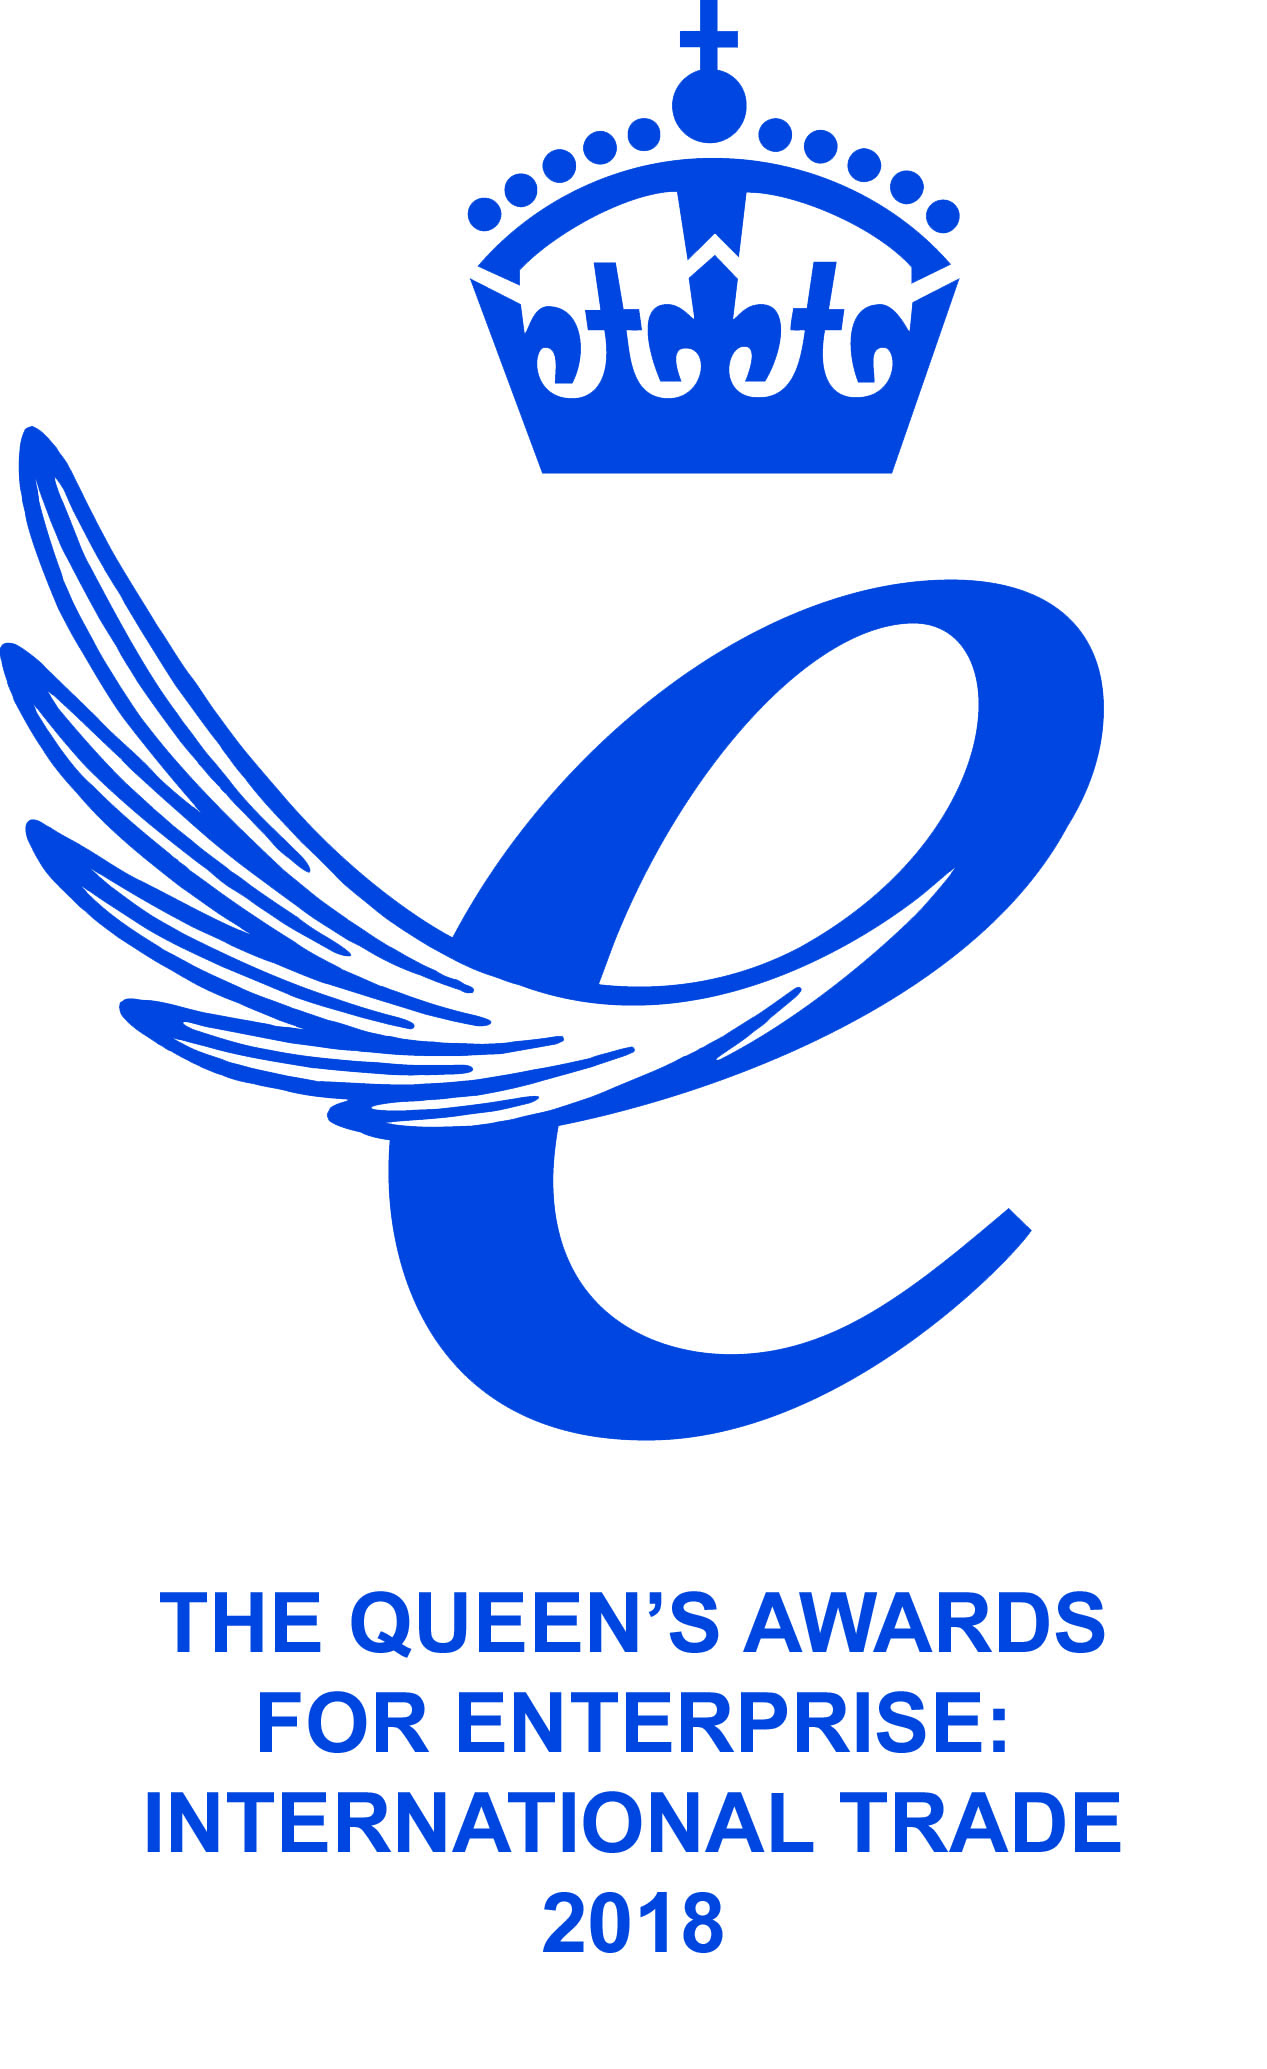 Lattimer wins Queen's Award for Enterprise